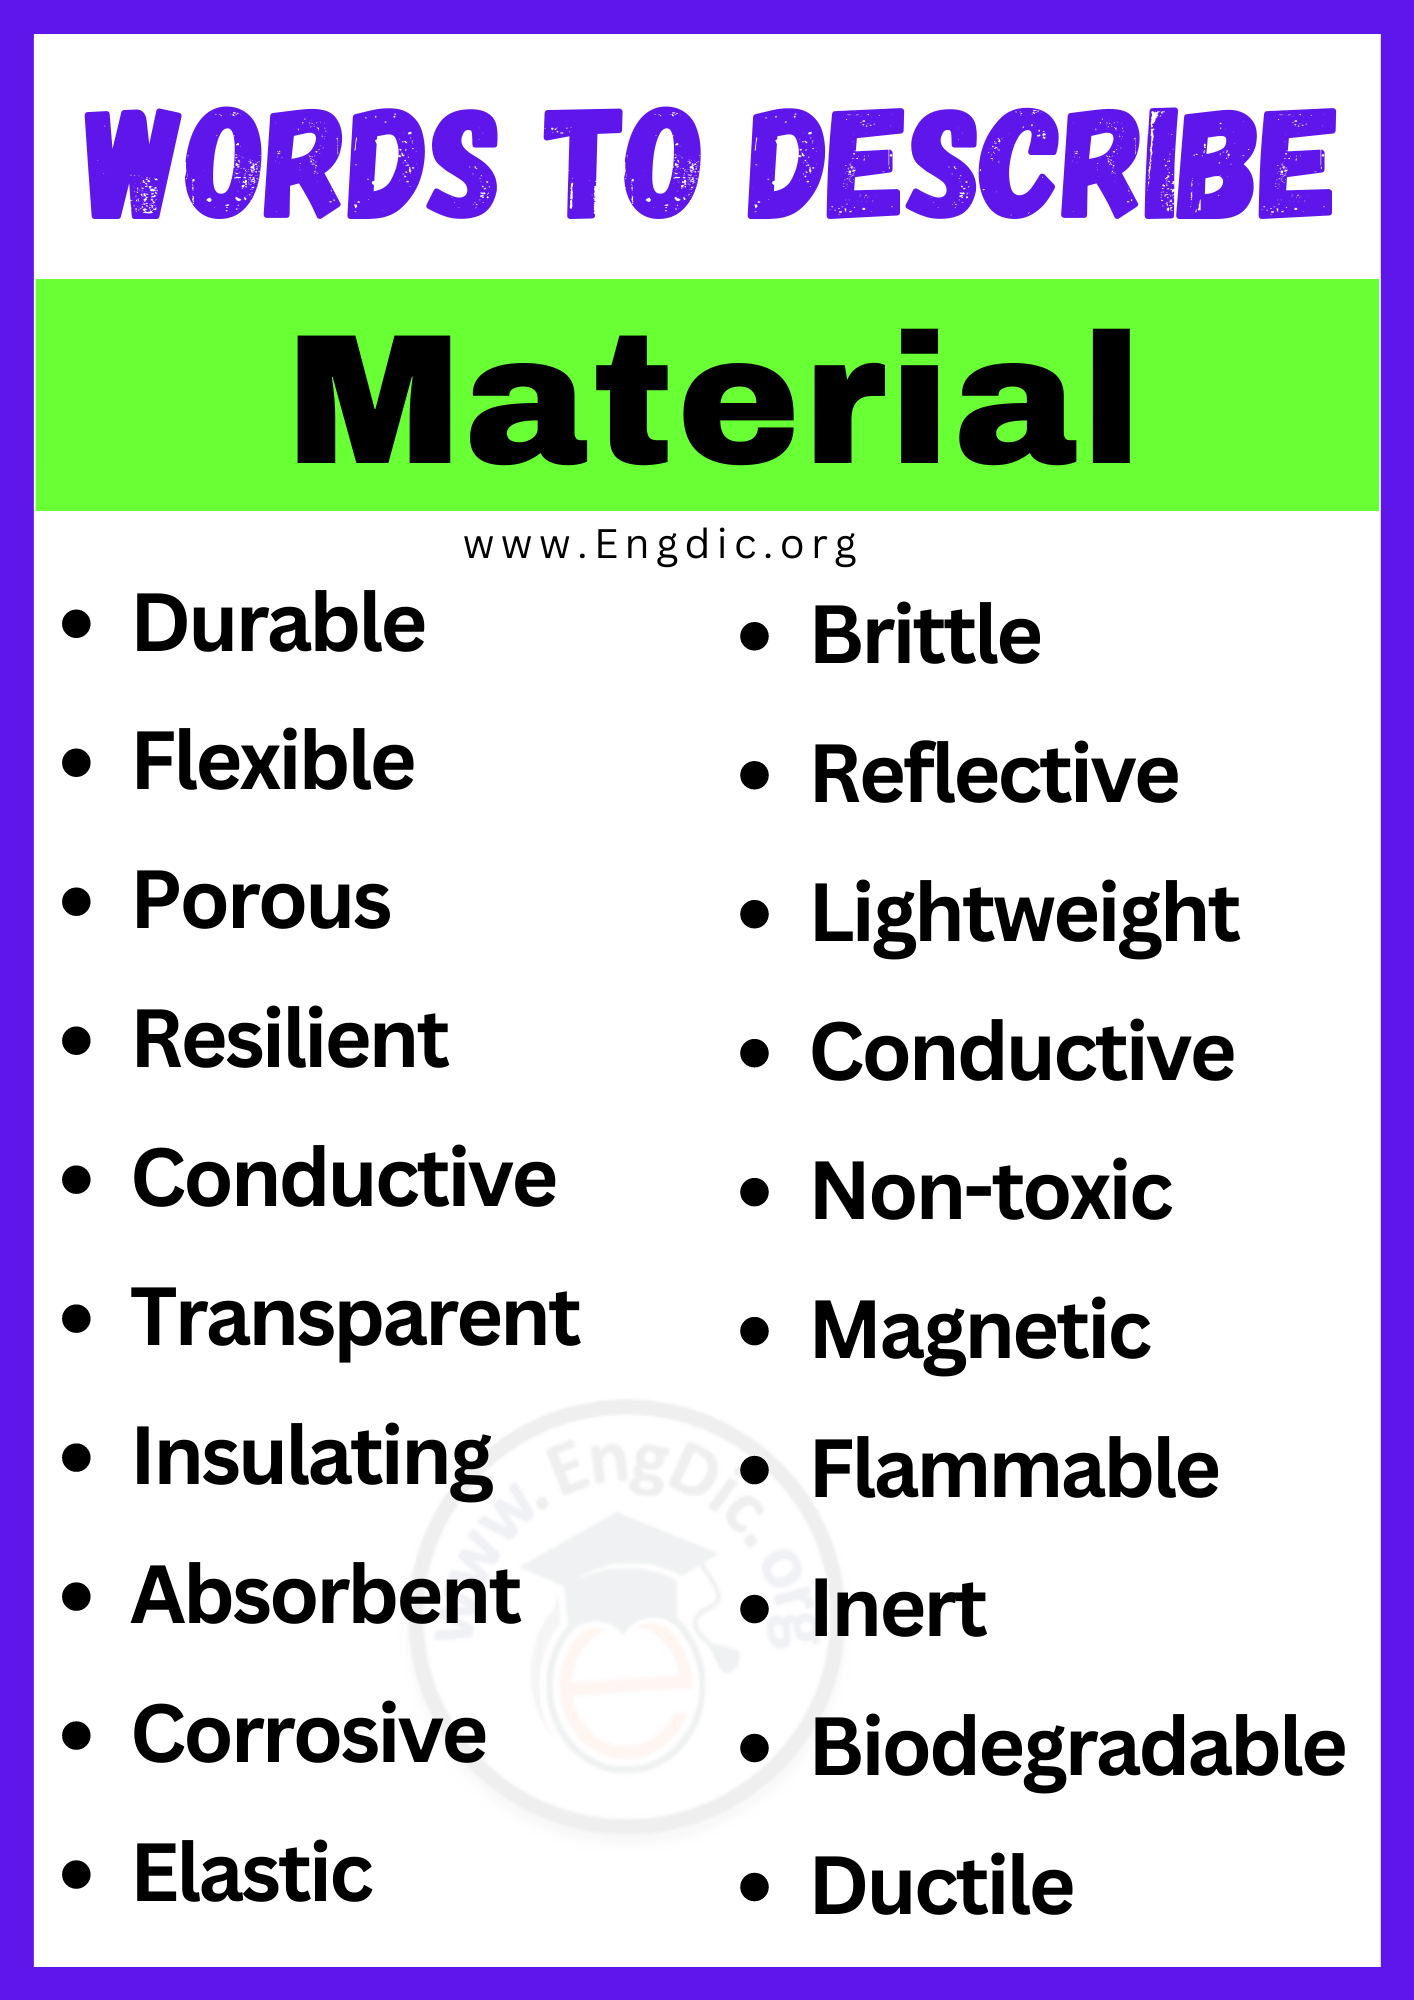 Words to Describe Material